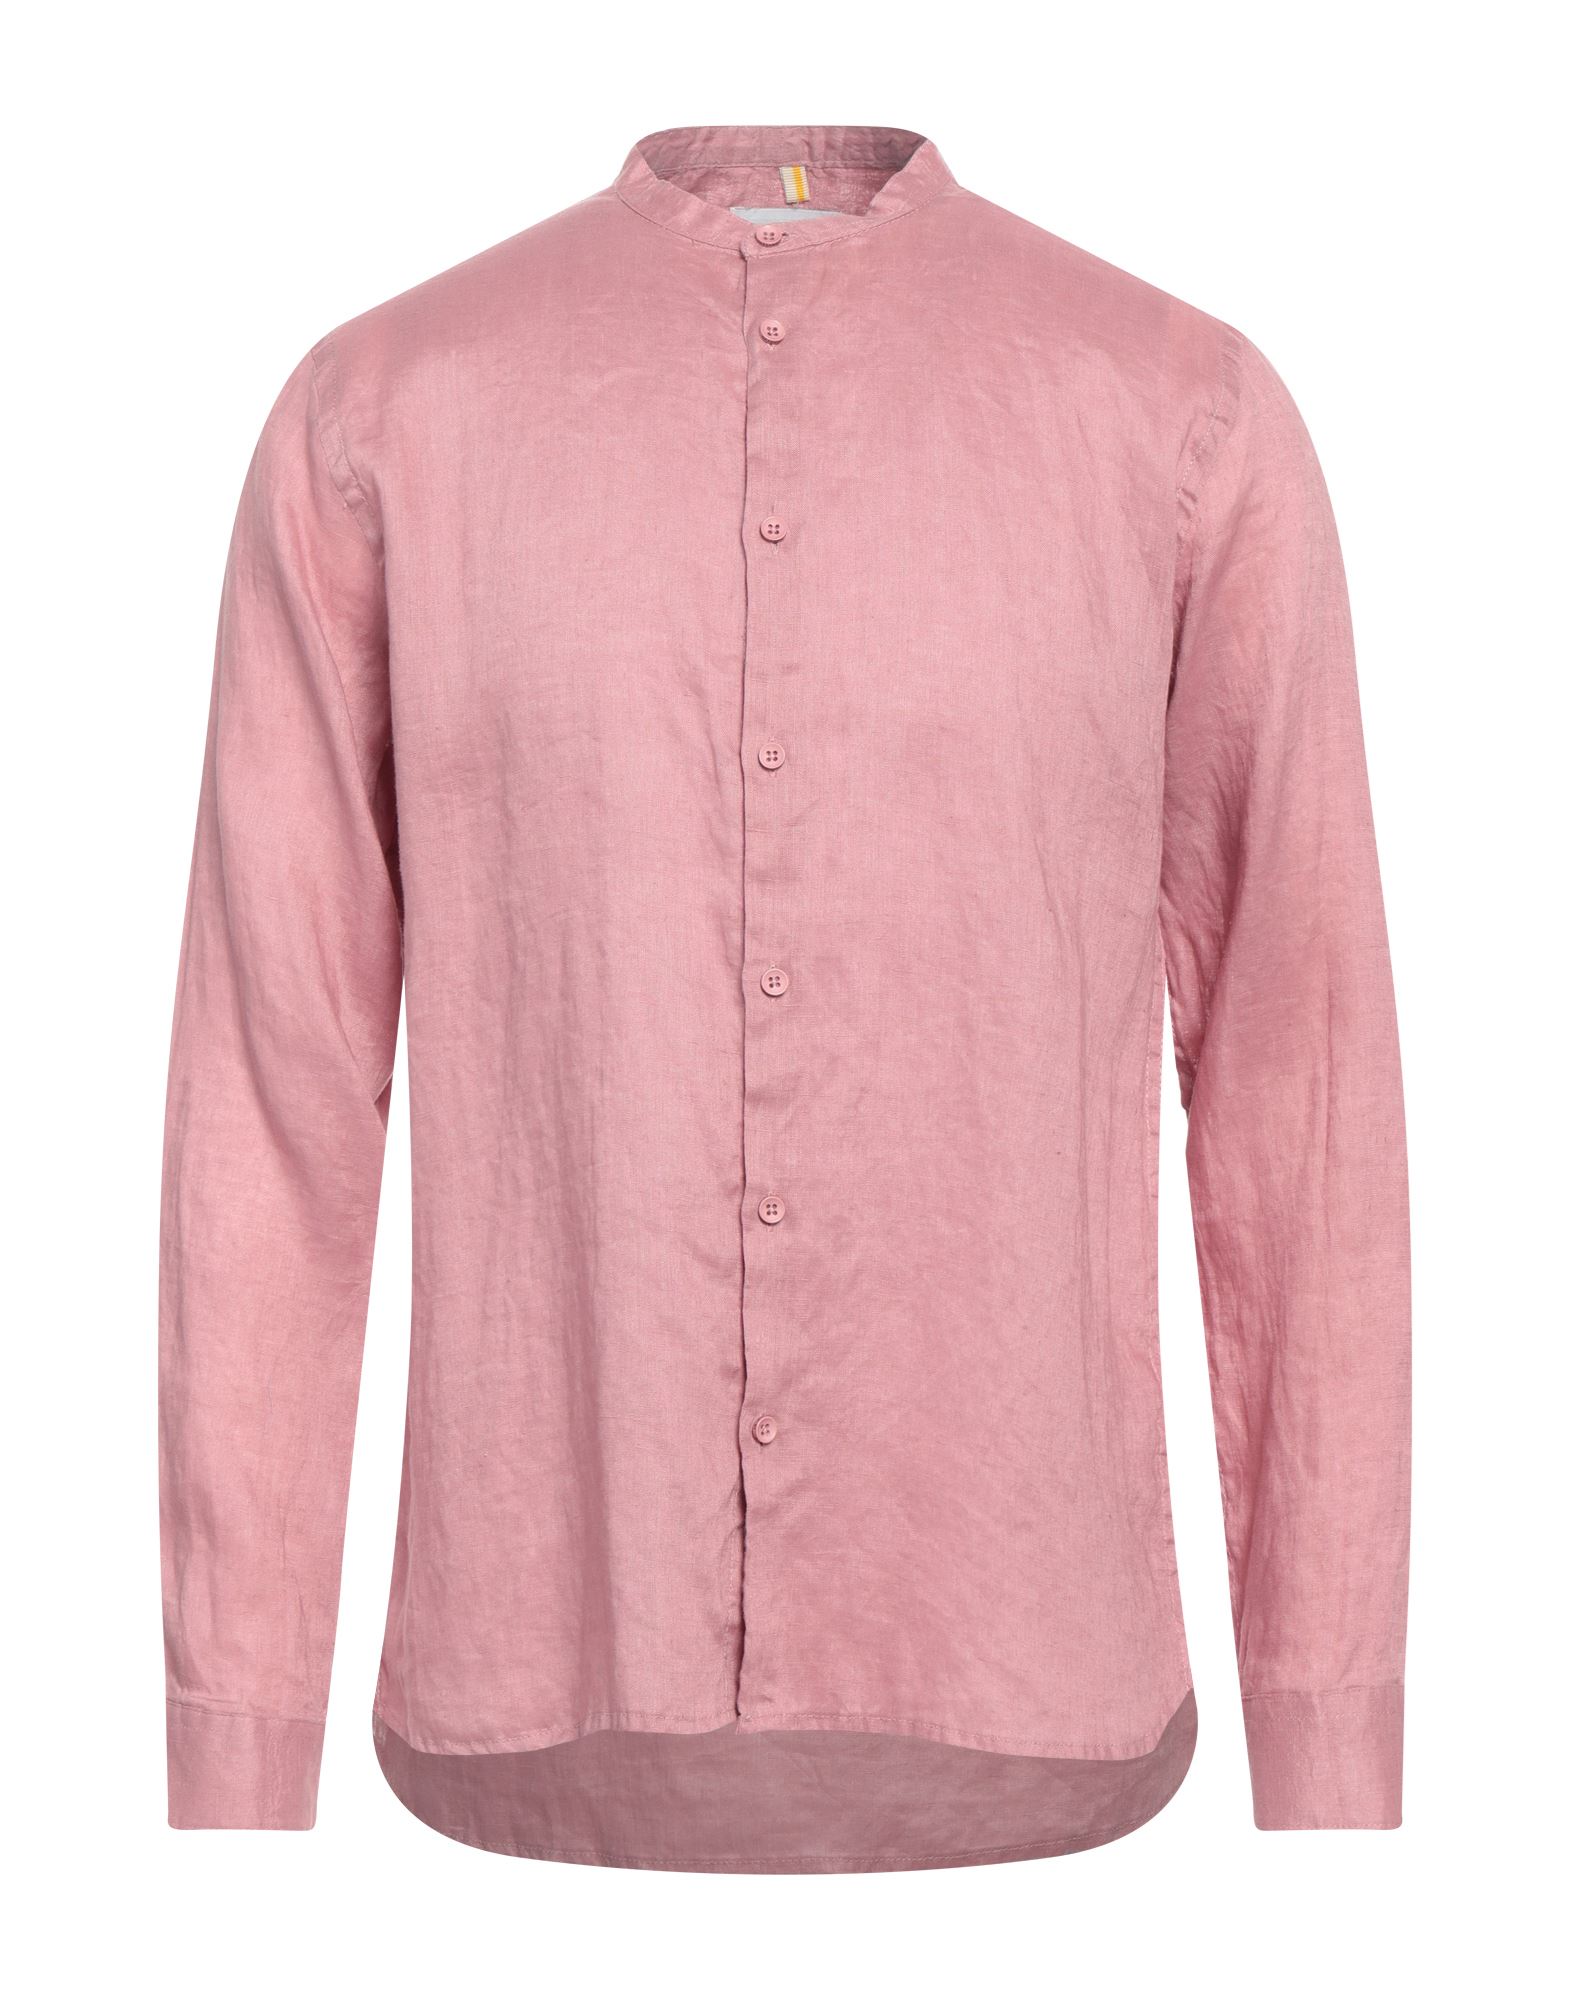 Gazzarrini Shirts In Pink